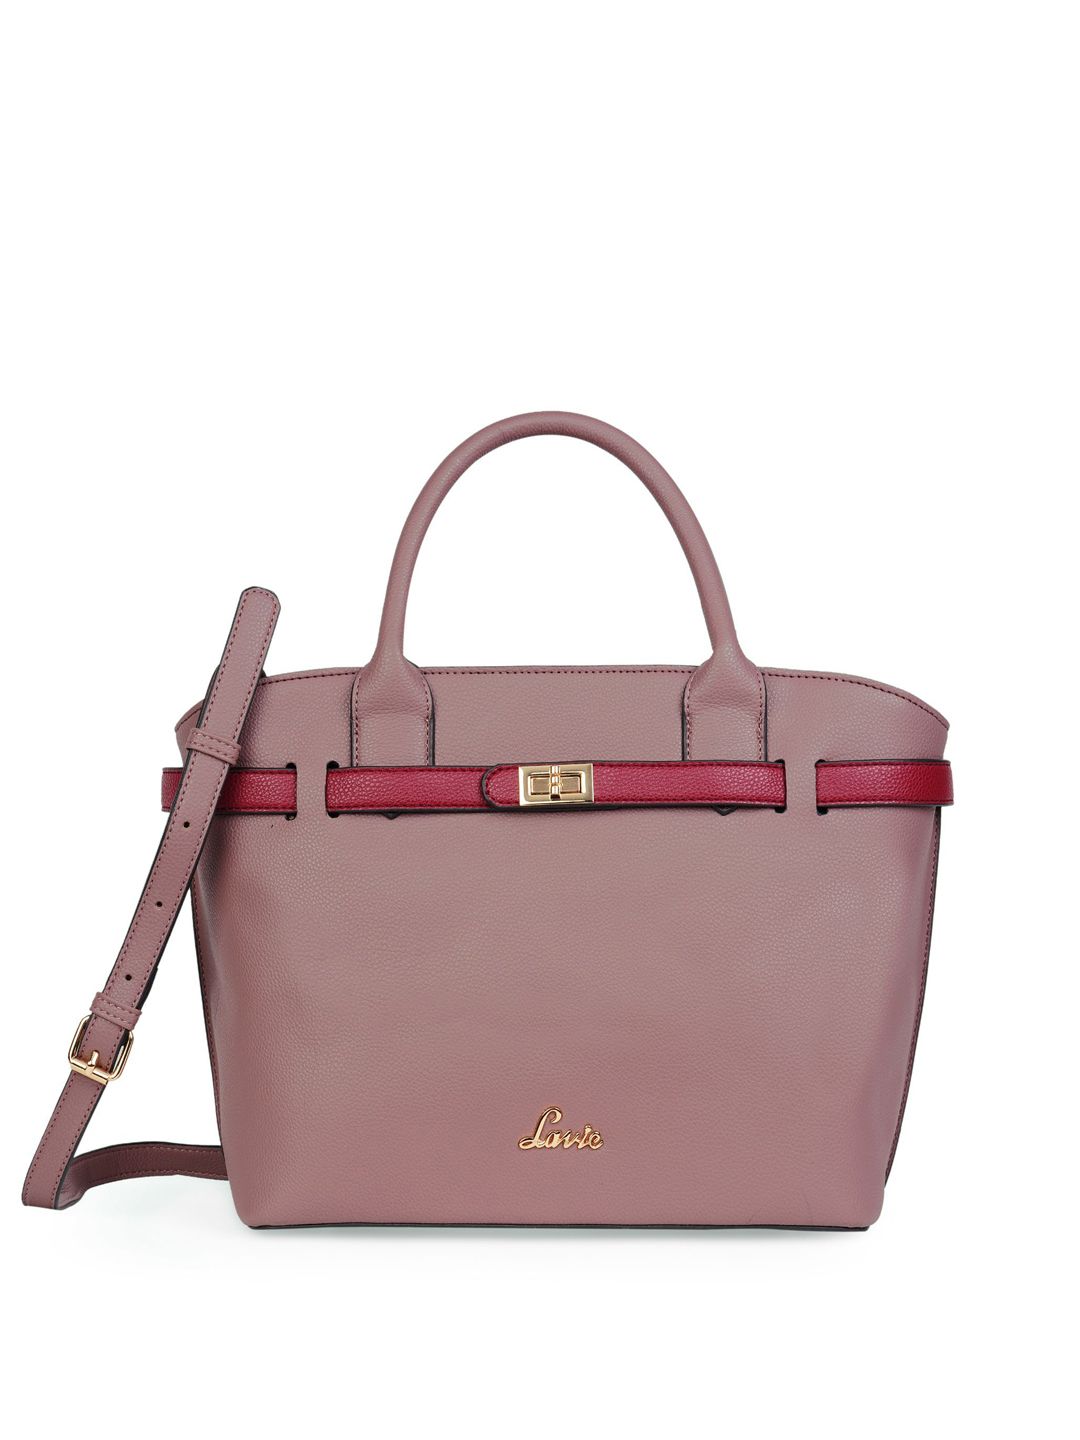 Lavie Pink Structured Handheld Bag Price in India